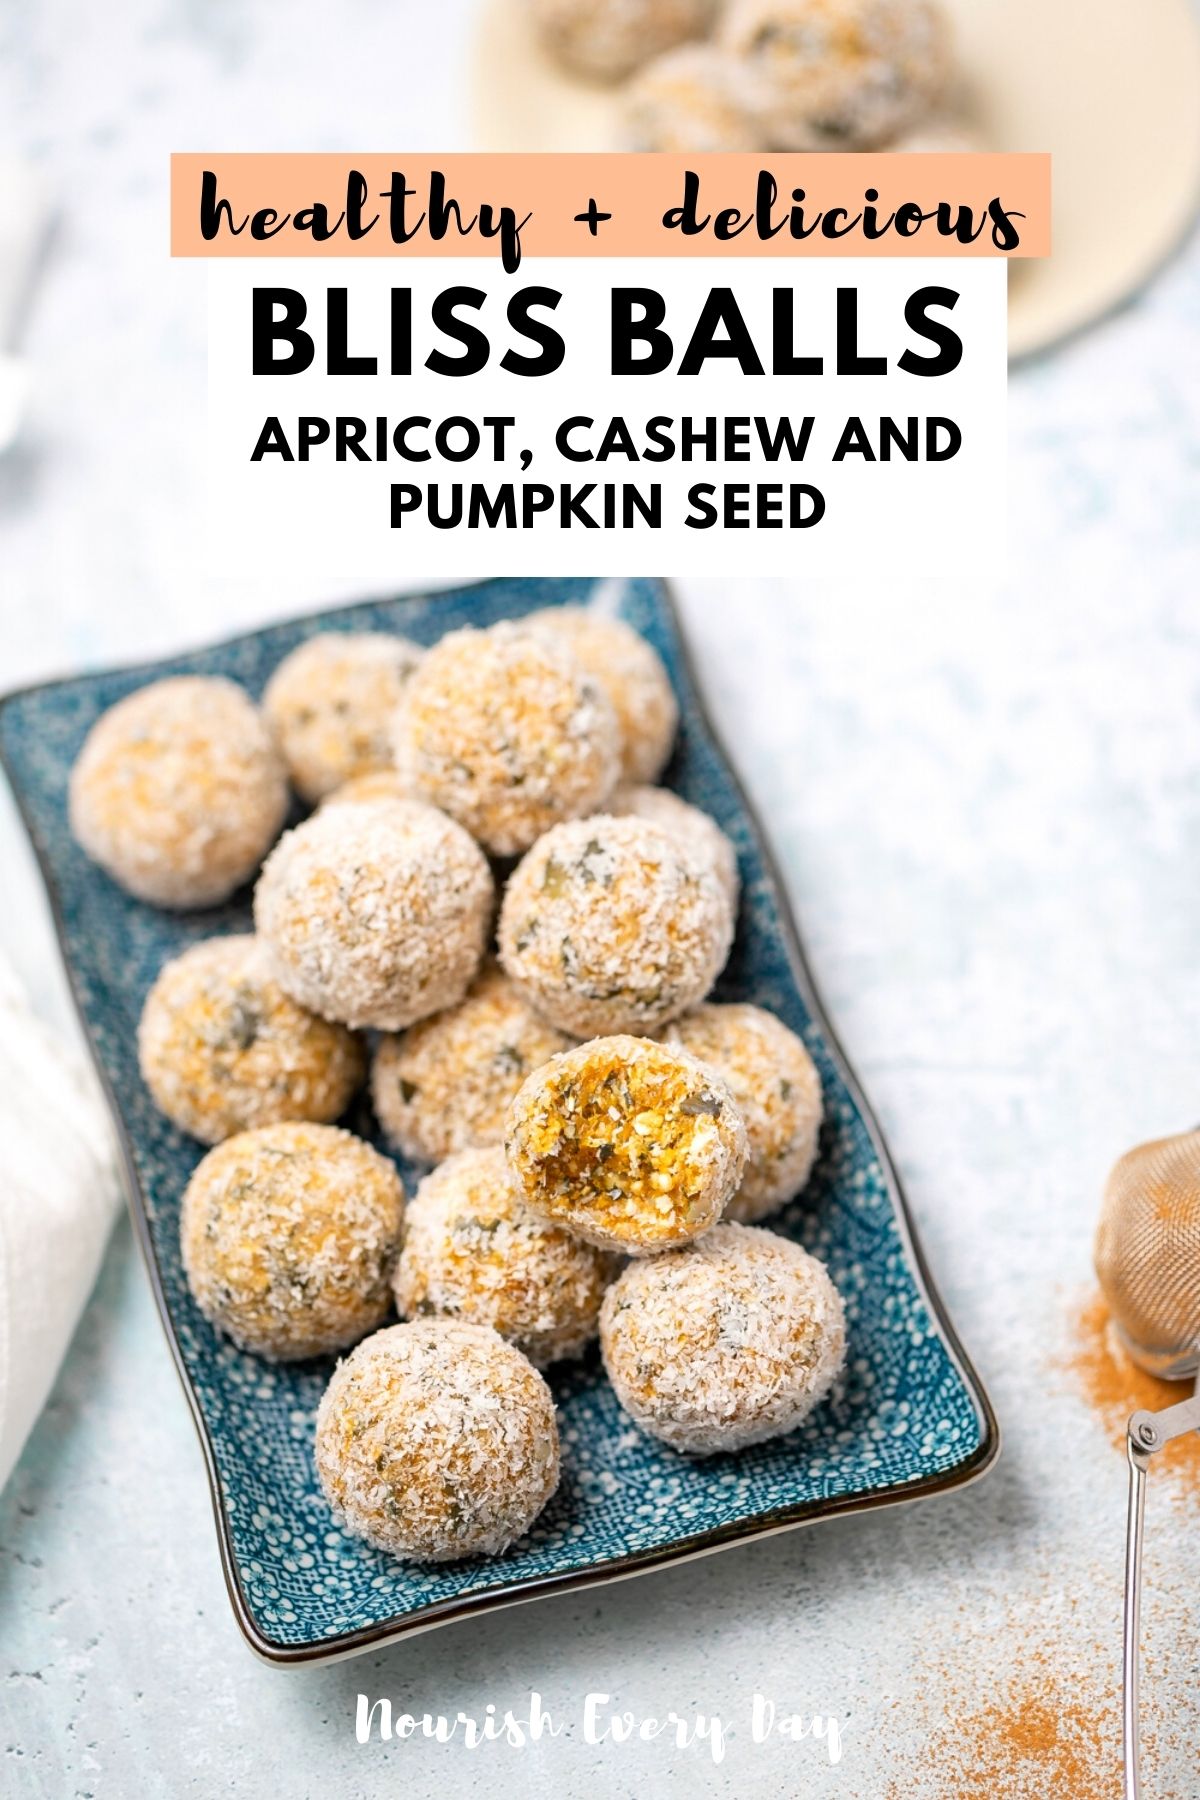 Apricot, Cashew and Pumpkin Seed Bliss Balls Recipe Pin